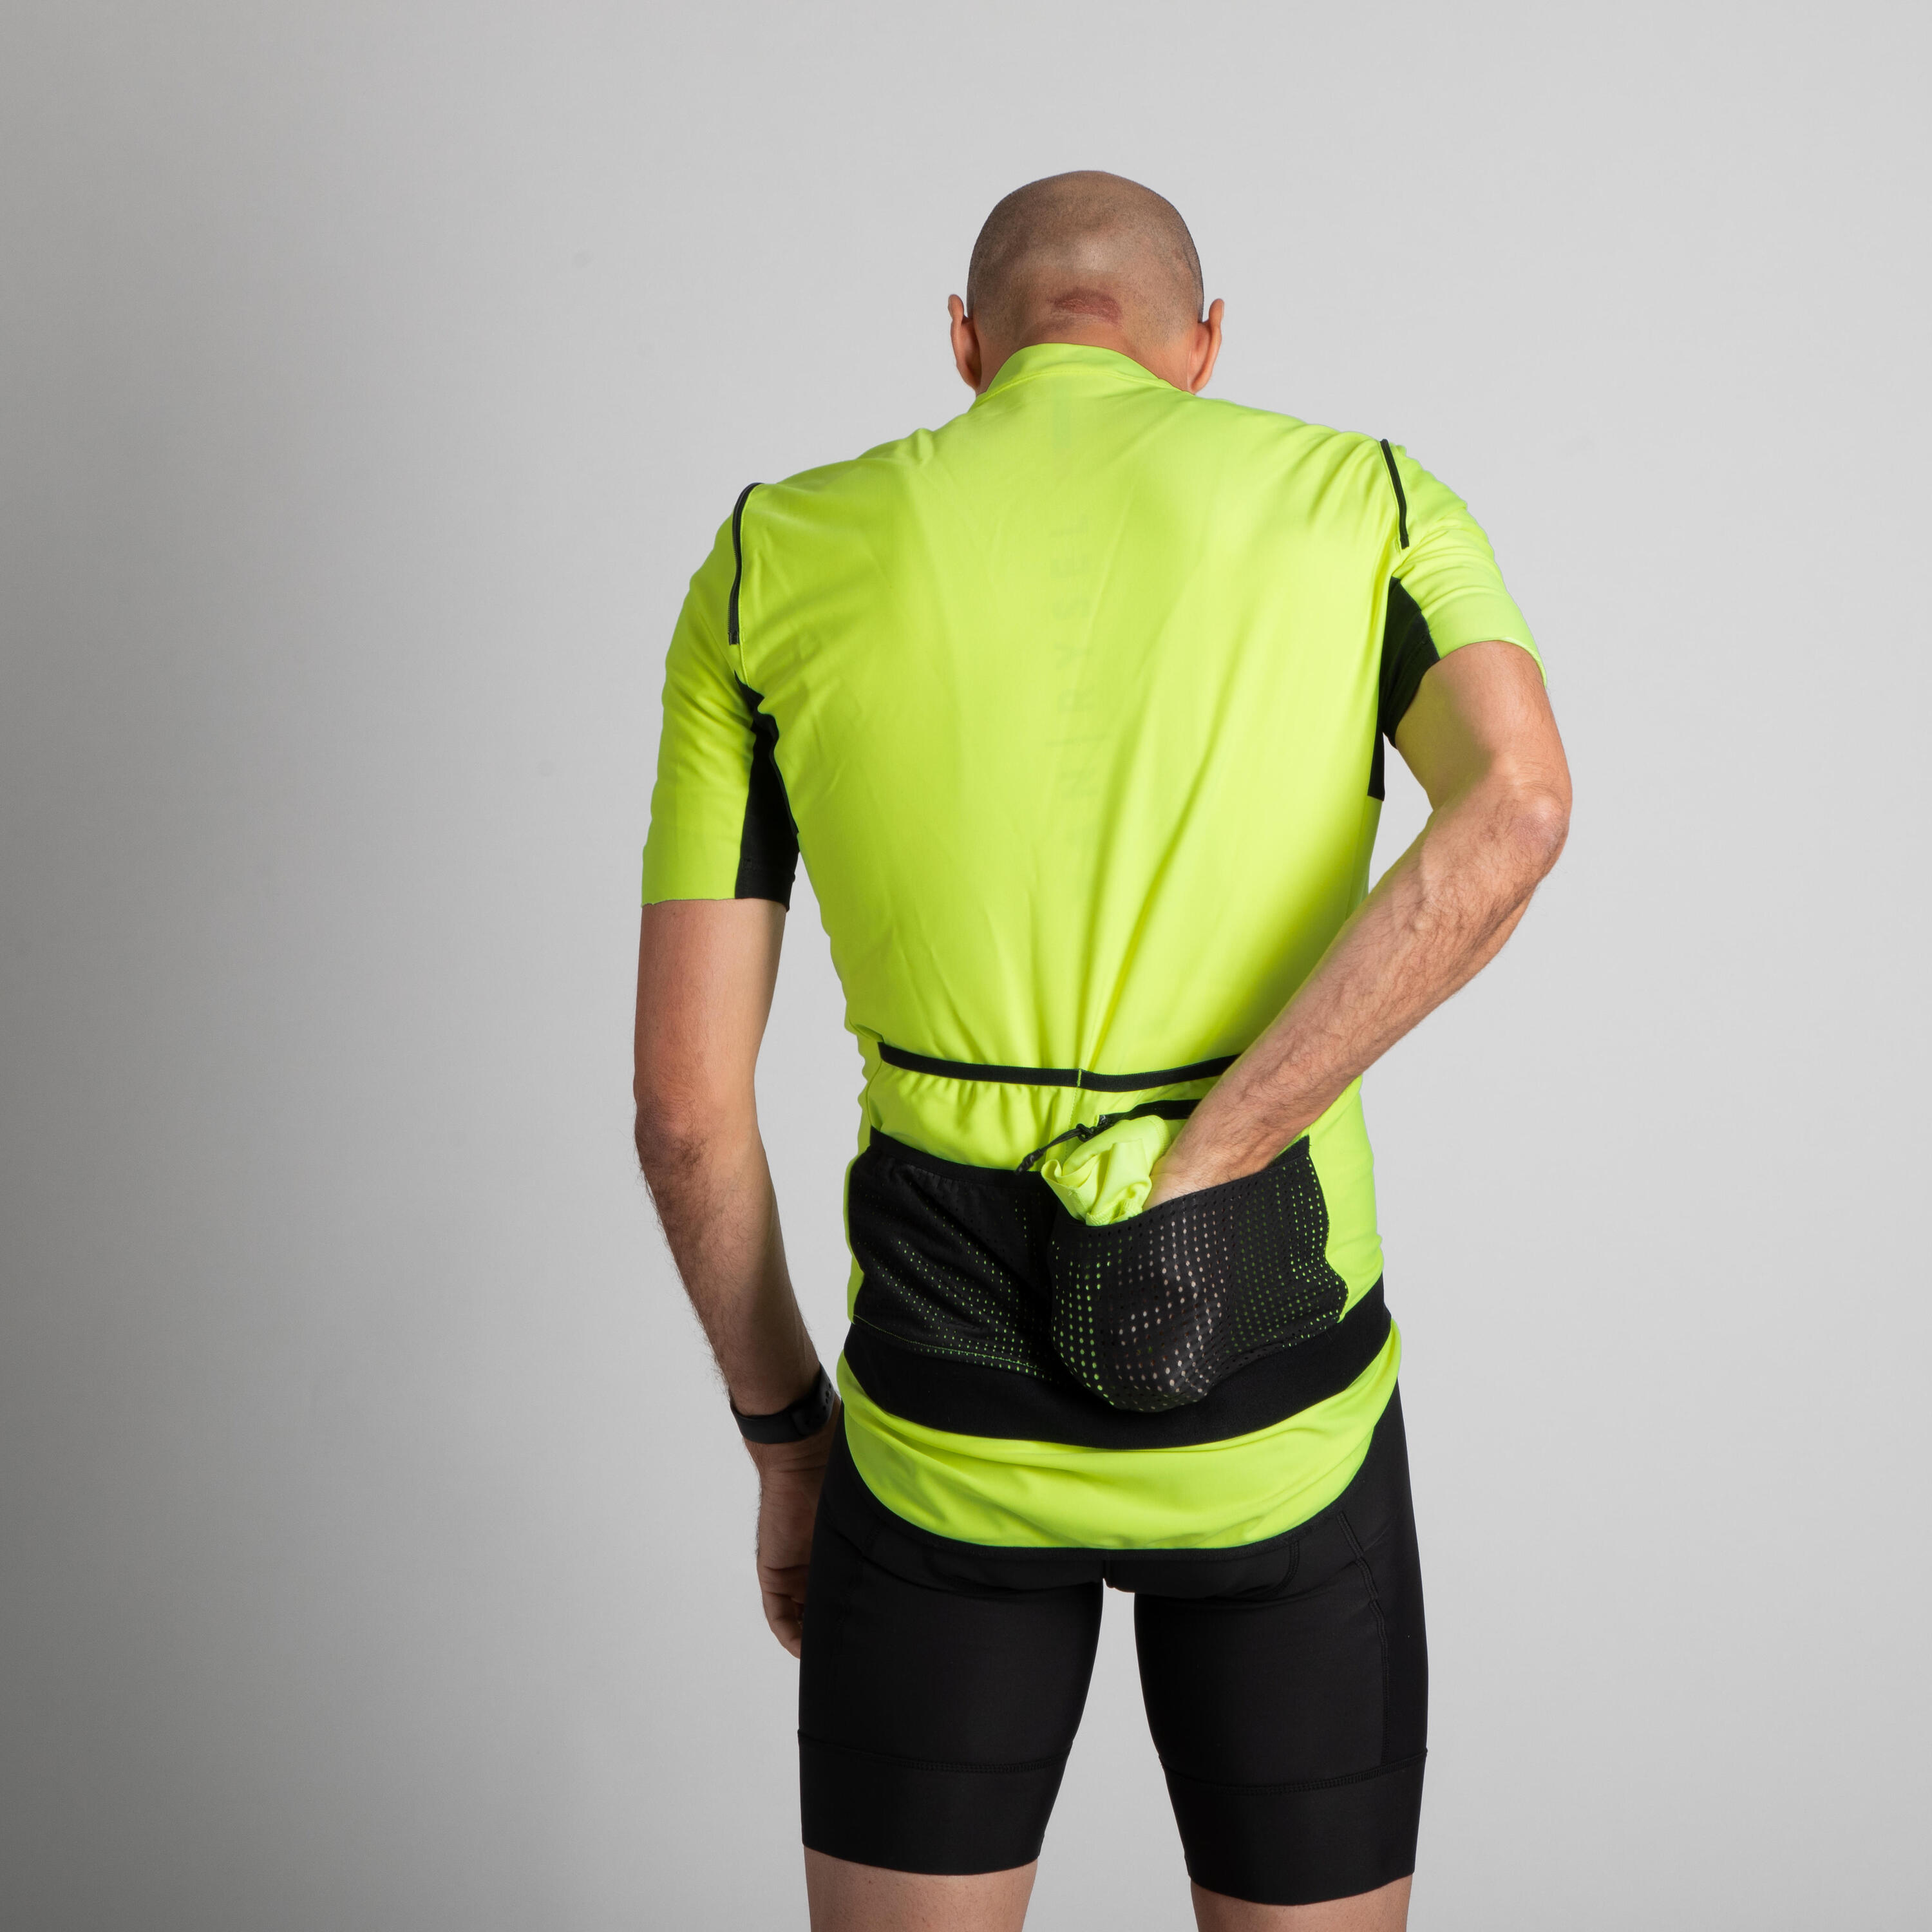 Men's Long-Sleeved Road Cycling Showerproof Convertible Jacket Racer - Yellow 11/11